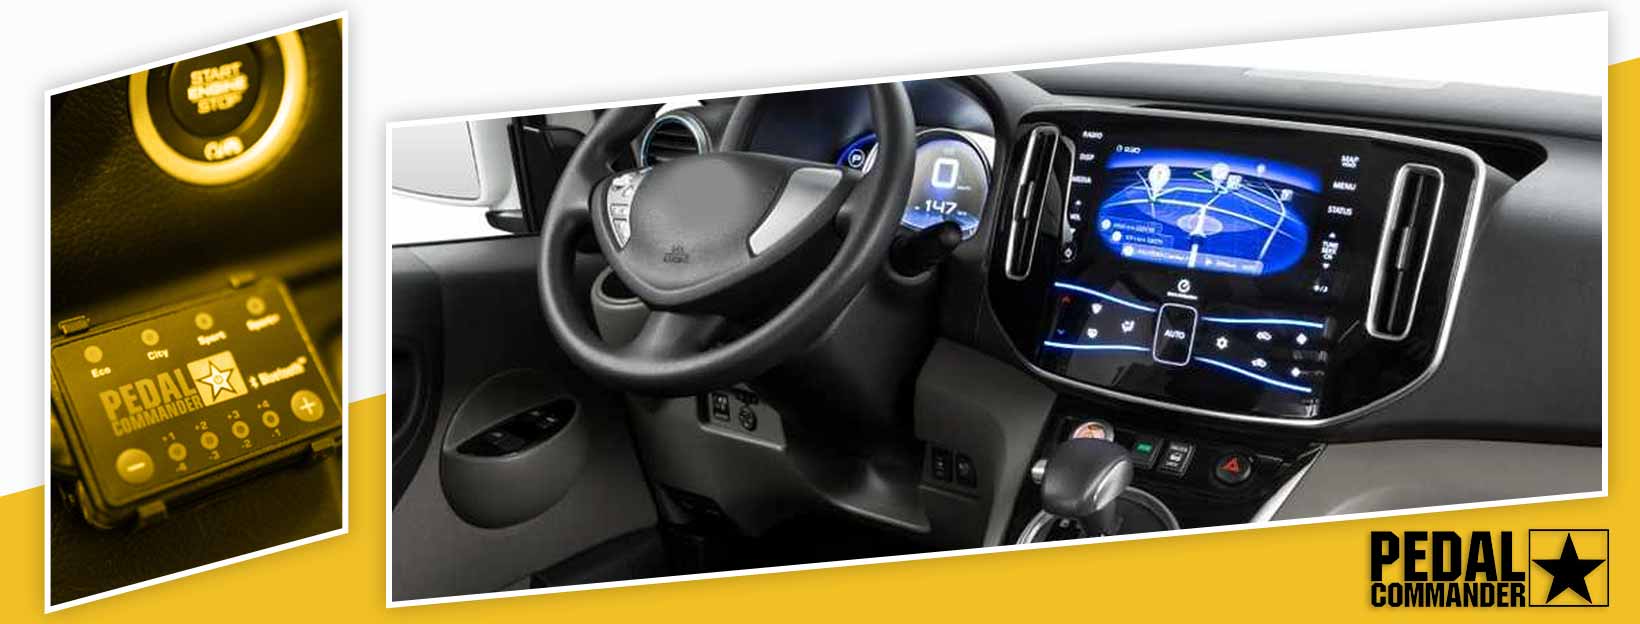 Pedal Commander for Nissan NV200 - interior